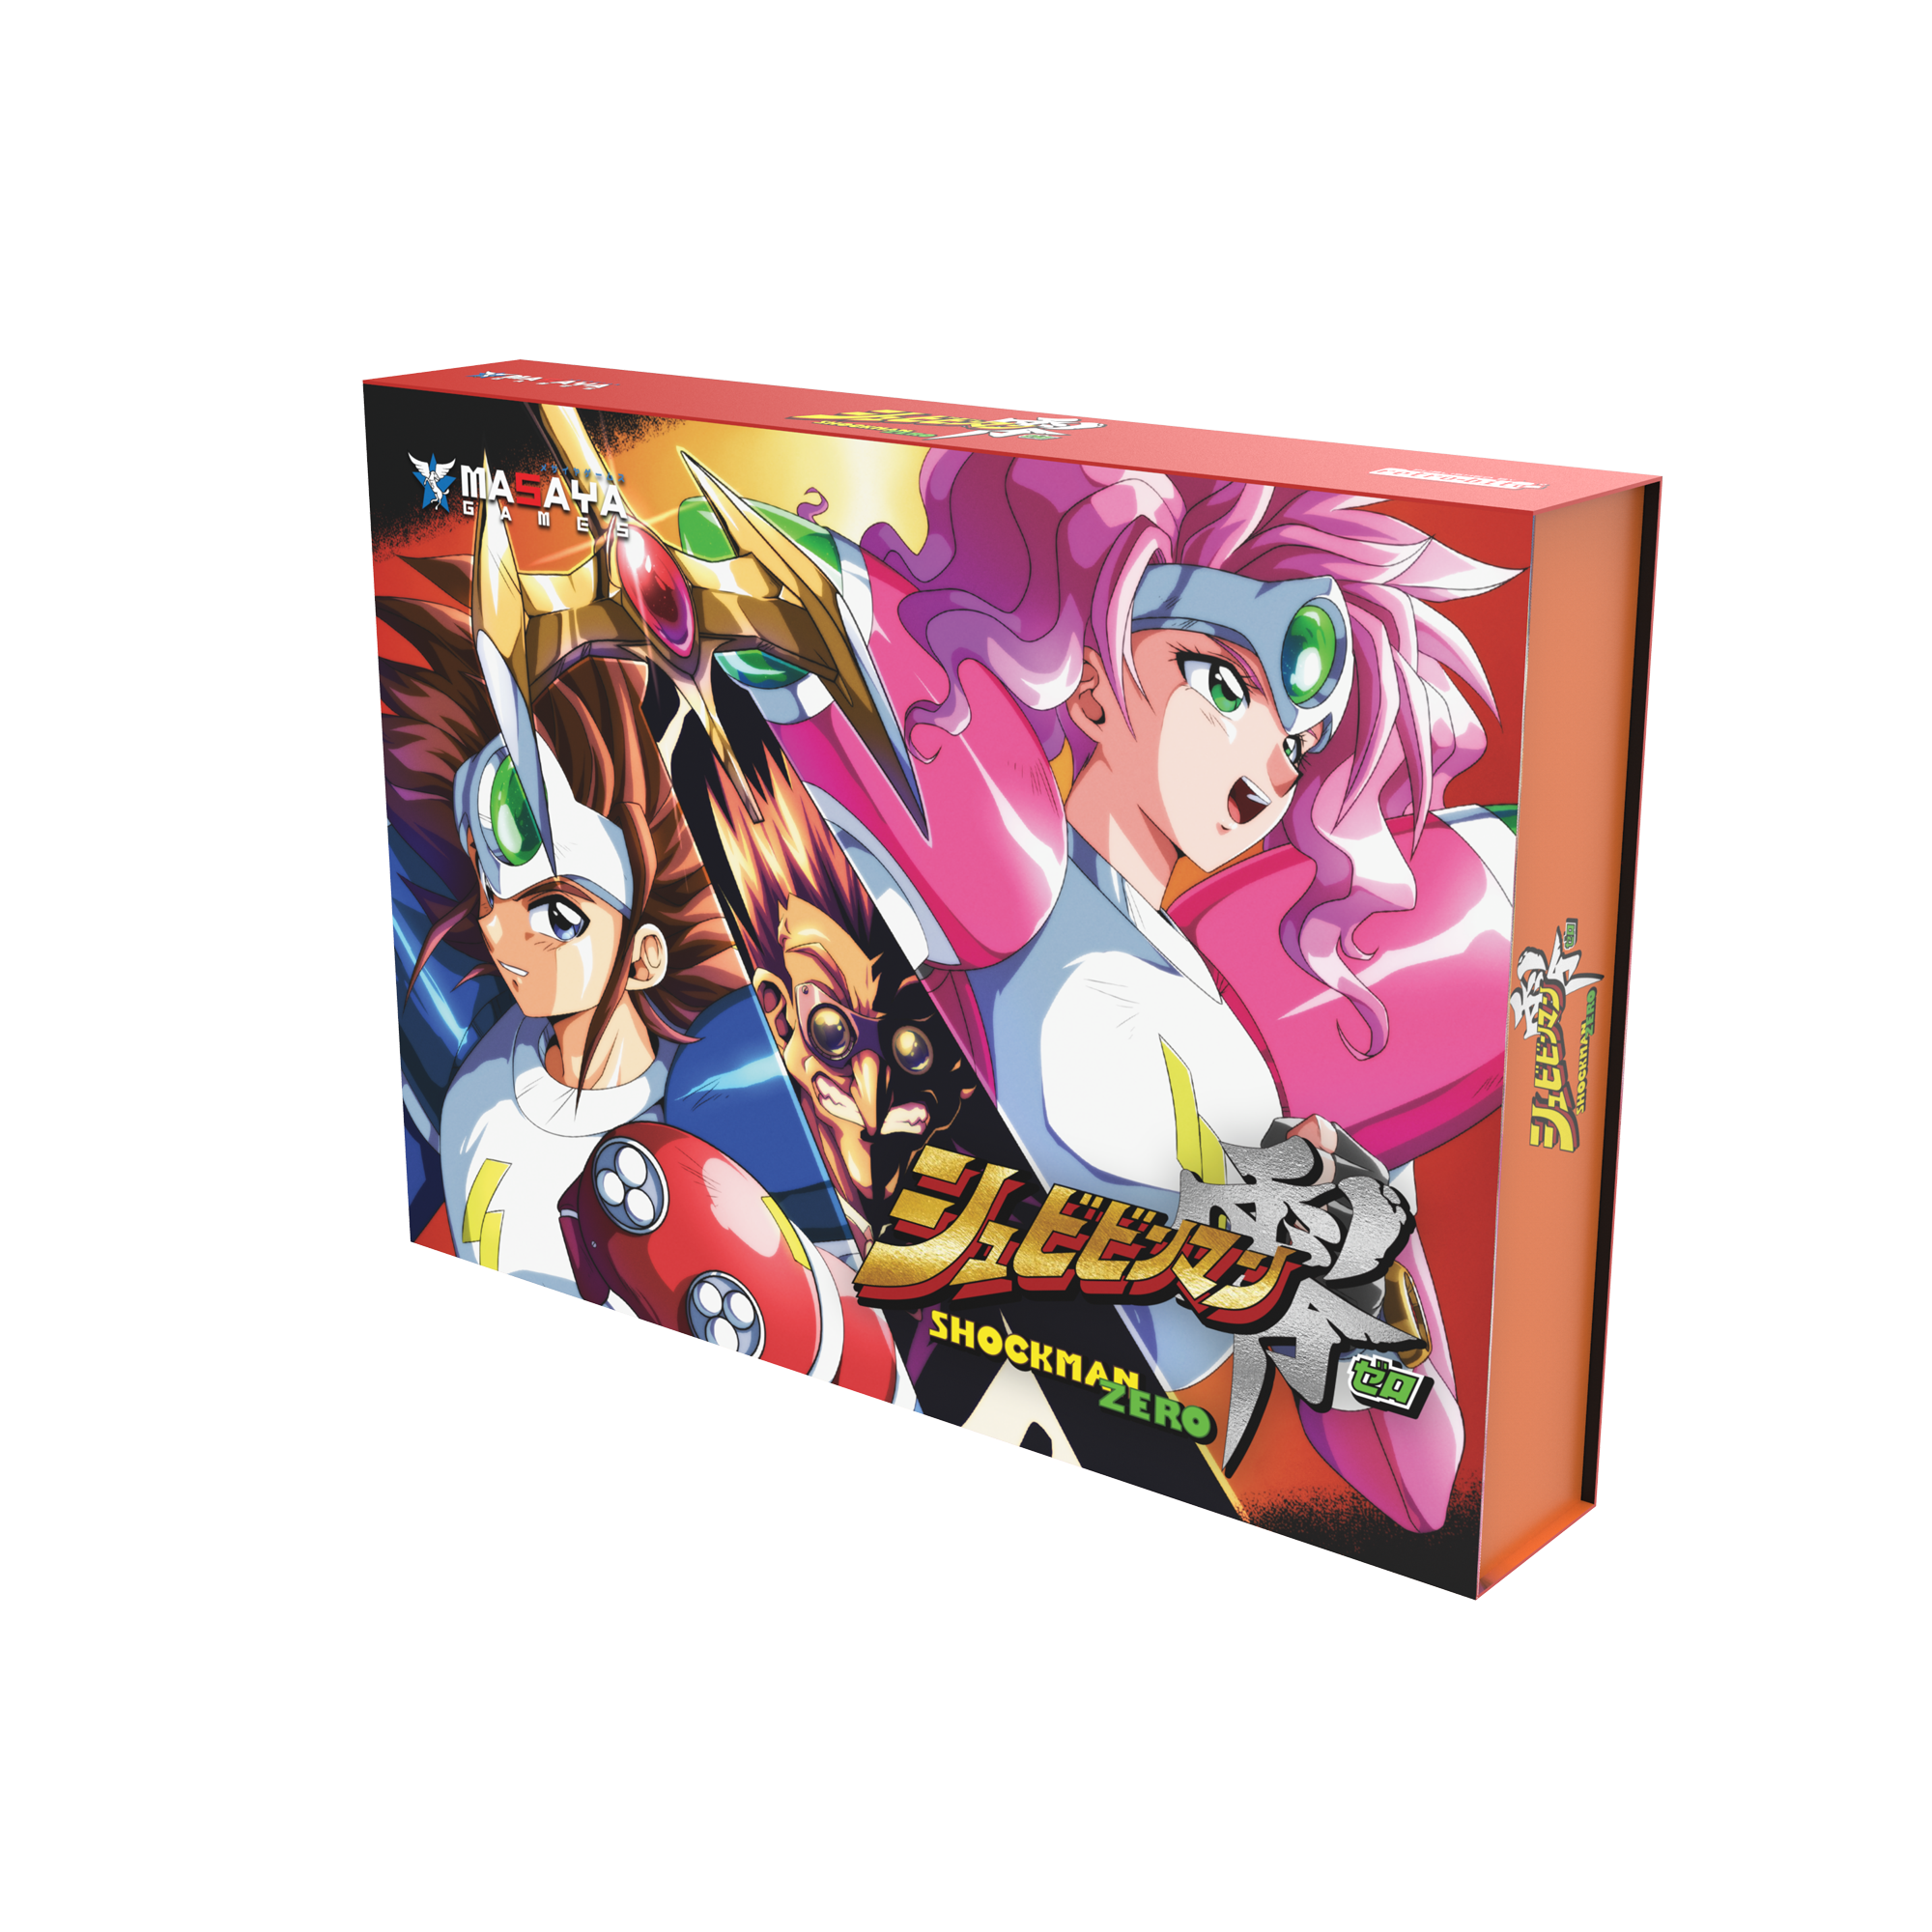 Shockman Zero Collectors Edition SNES PAL (Schibibinman Zero) - Cartouche PAL Super Nintendo - Retro-bit Publishing